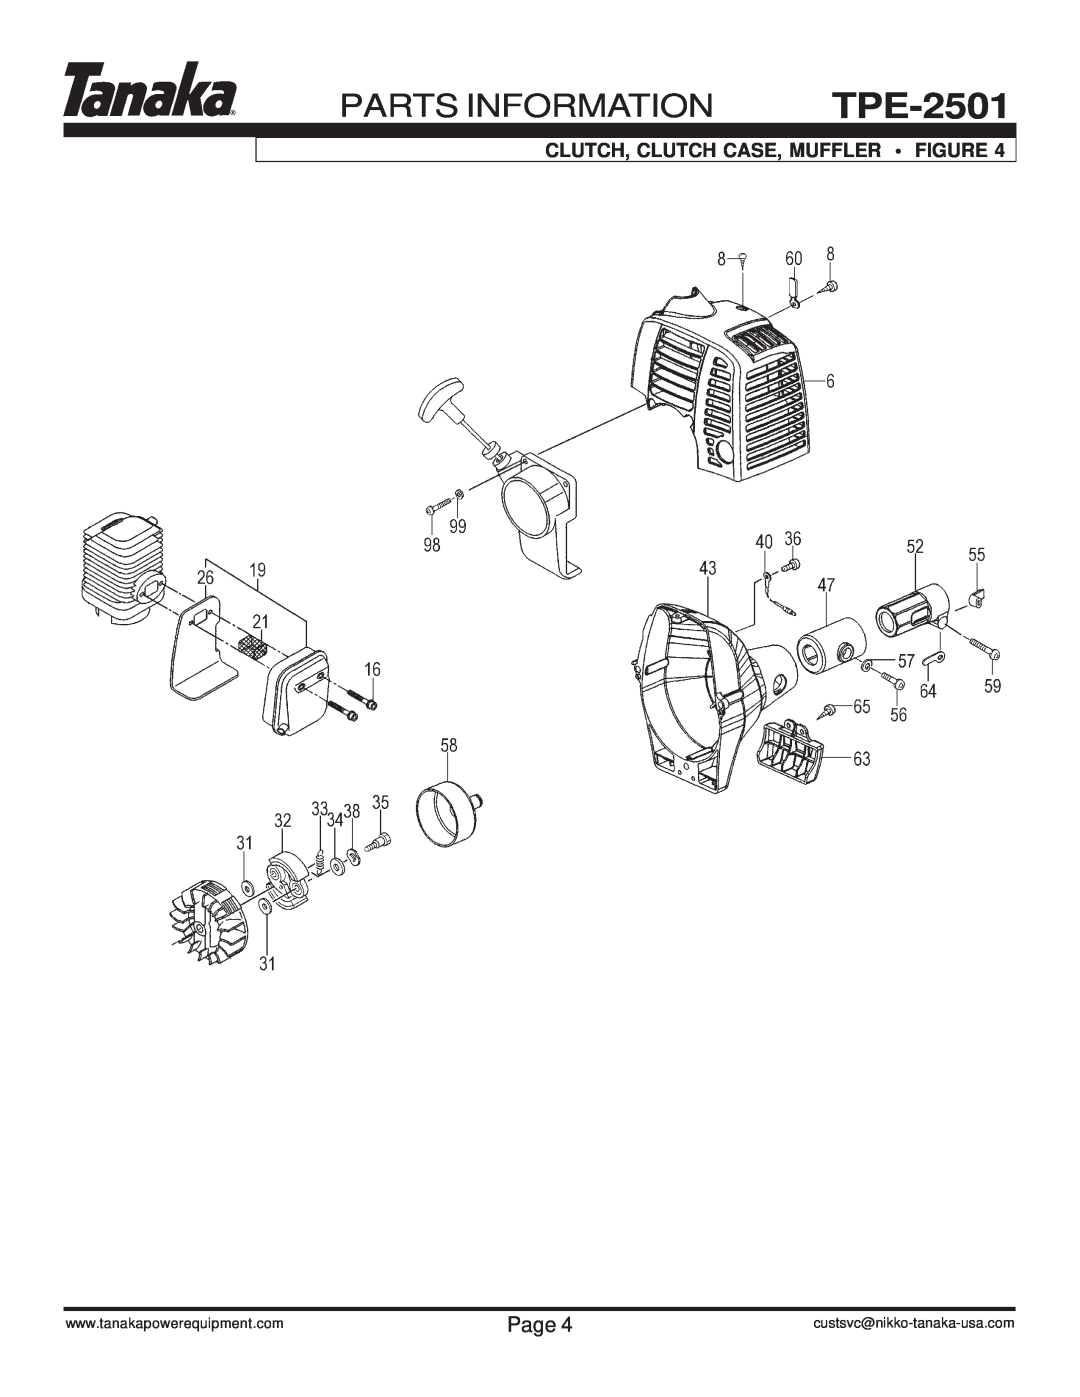 Tanaka TPE-2501 manual Parts Information, Clutch, Clutch Case, Muffler • Figure, Page, custsvc@nikko-tanaka-usa.com 